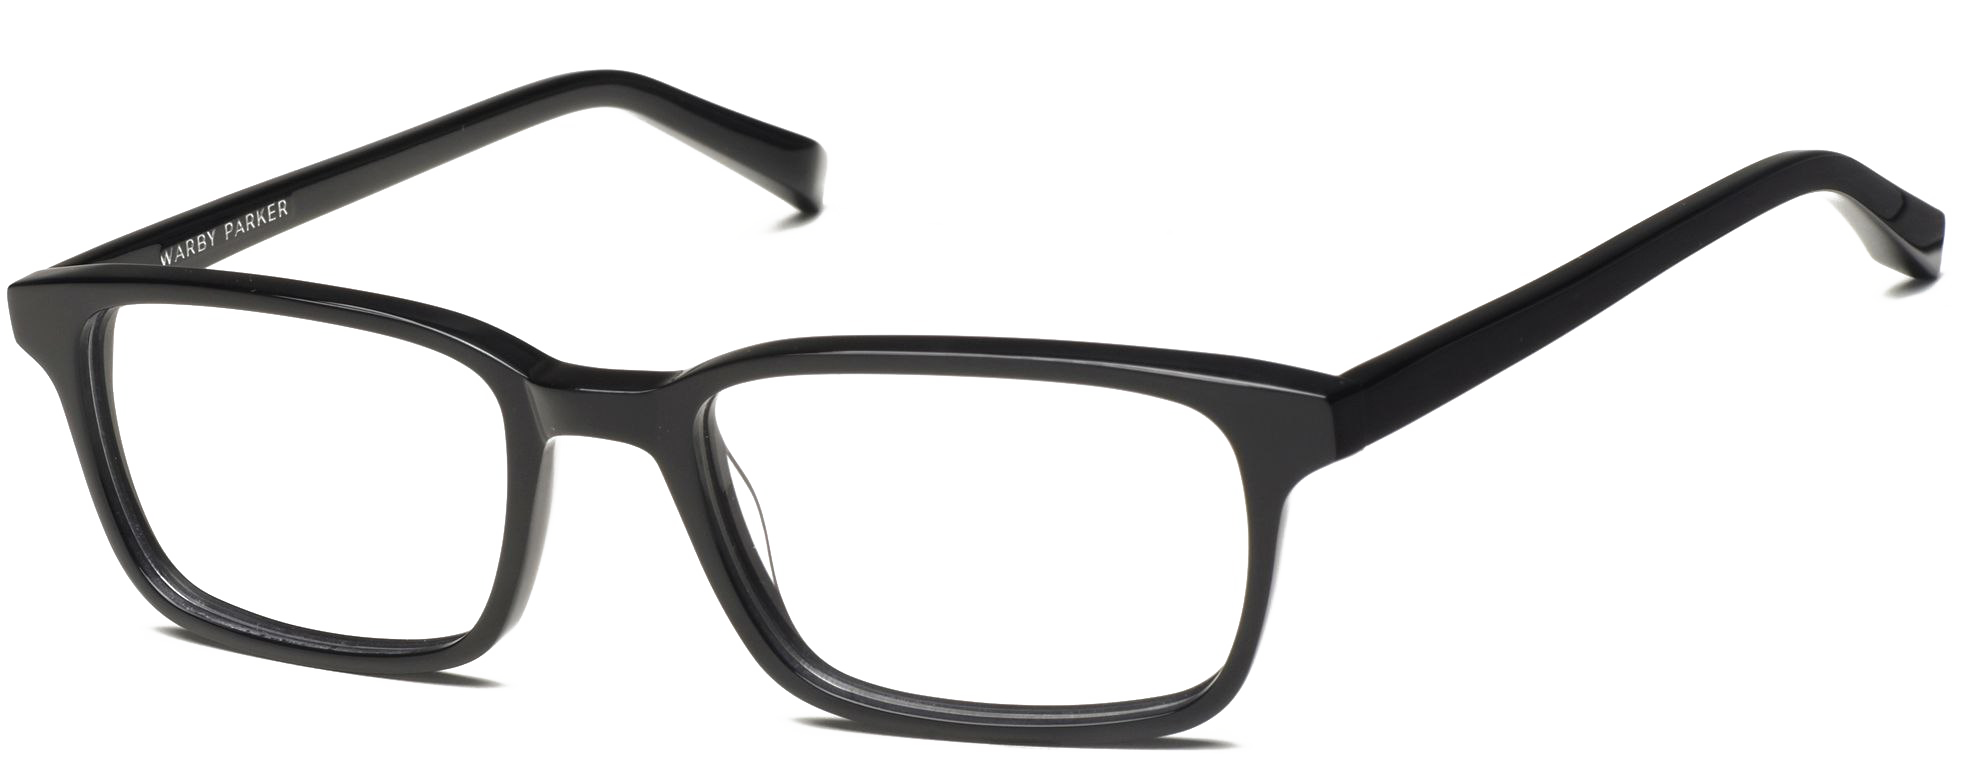 Immagine di sfondo di occhiali neri PNG